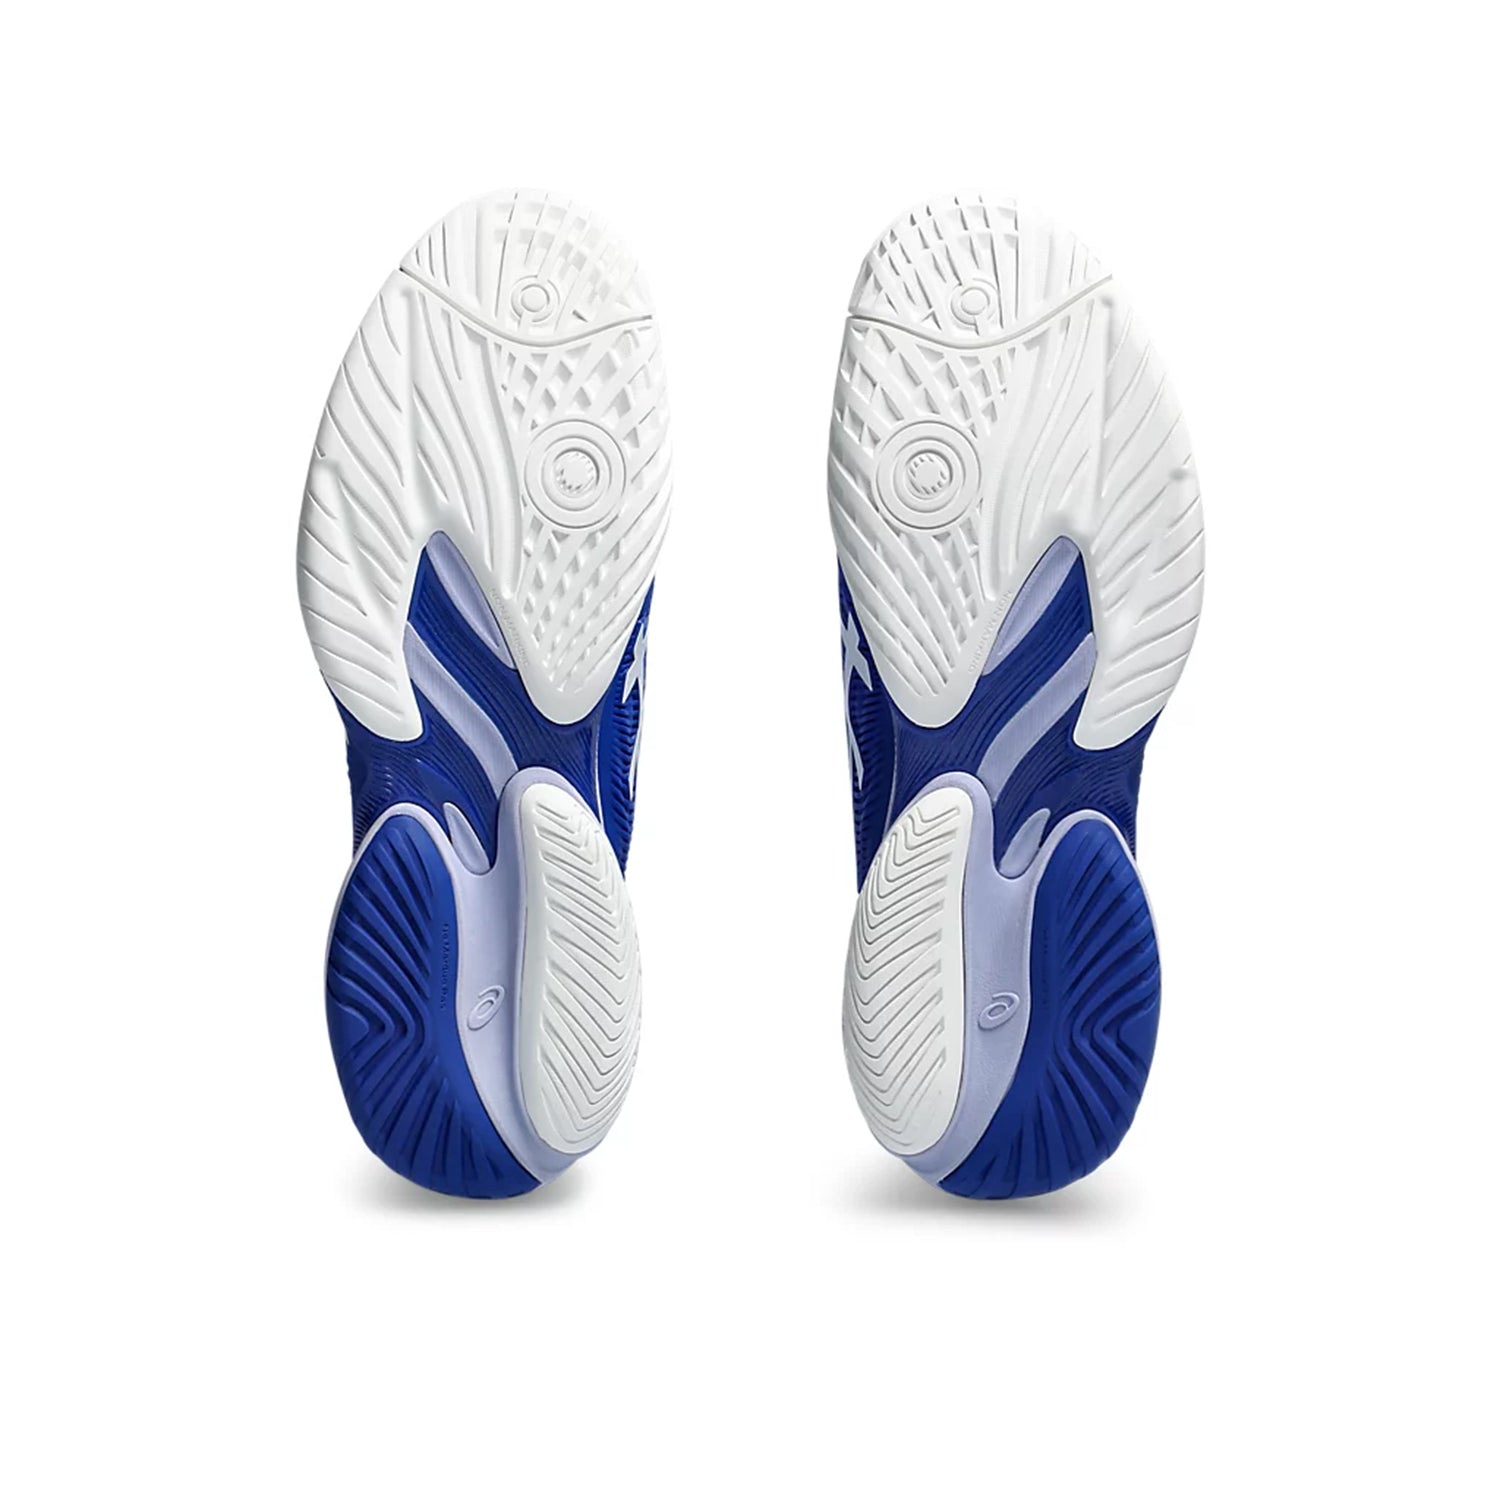 Asics Court FF 3 Novak Men's Tennis Shoes - Best Price online Prokicksports.com